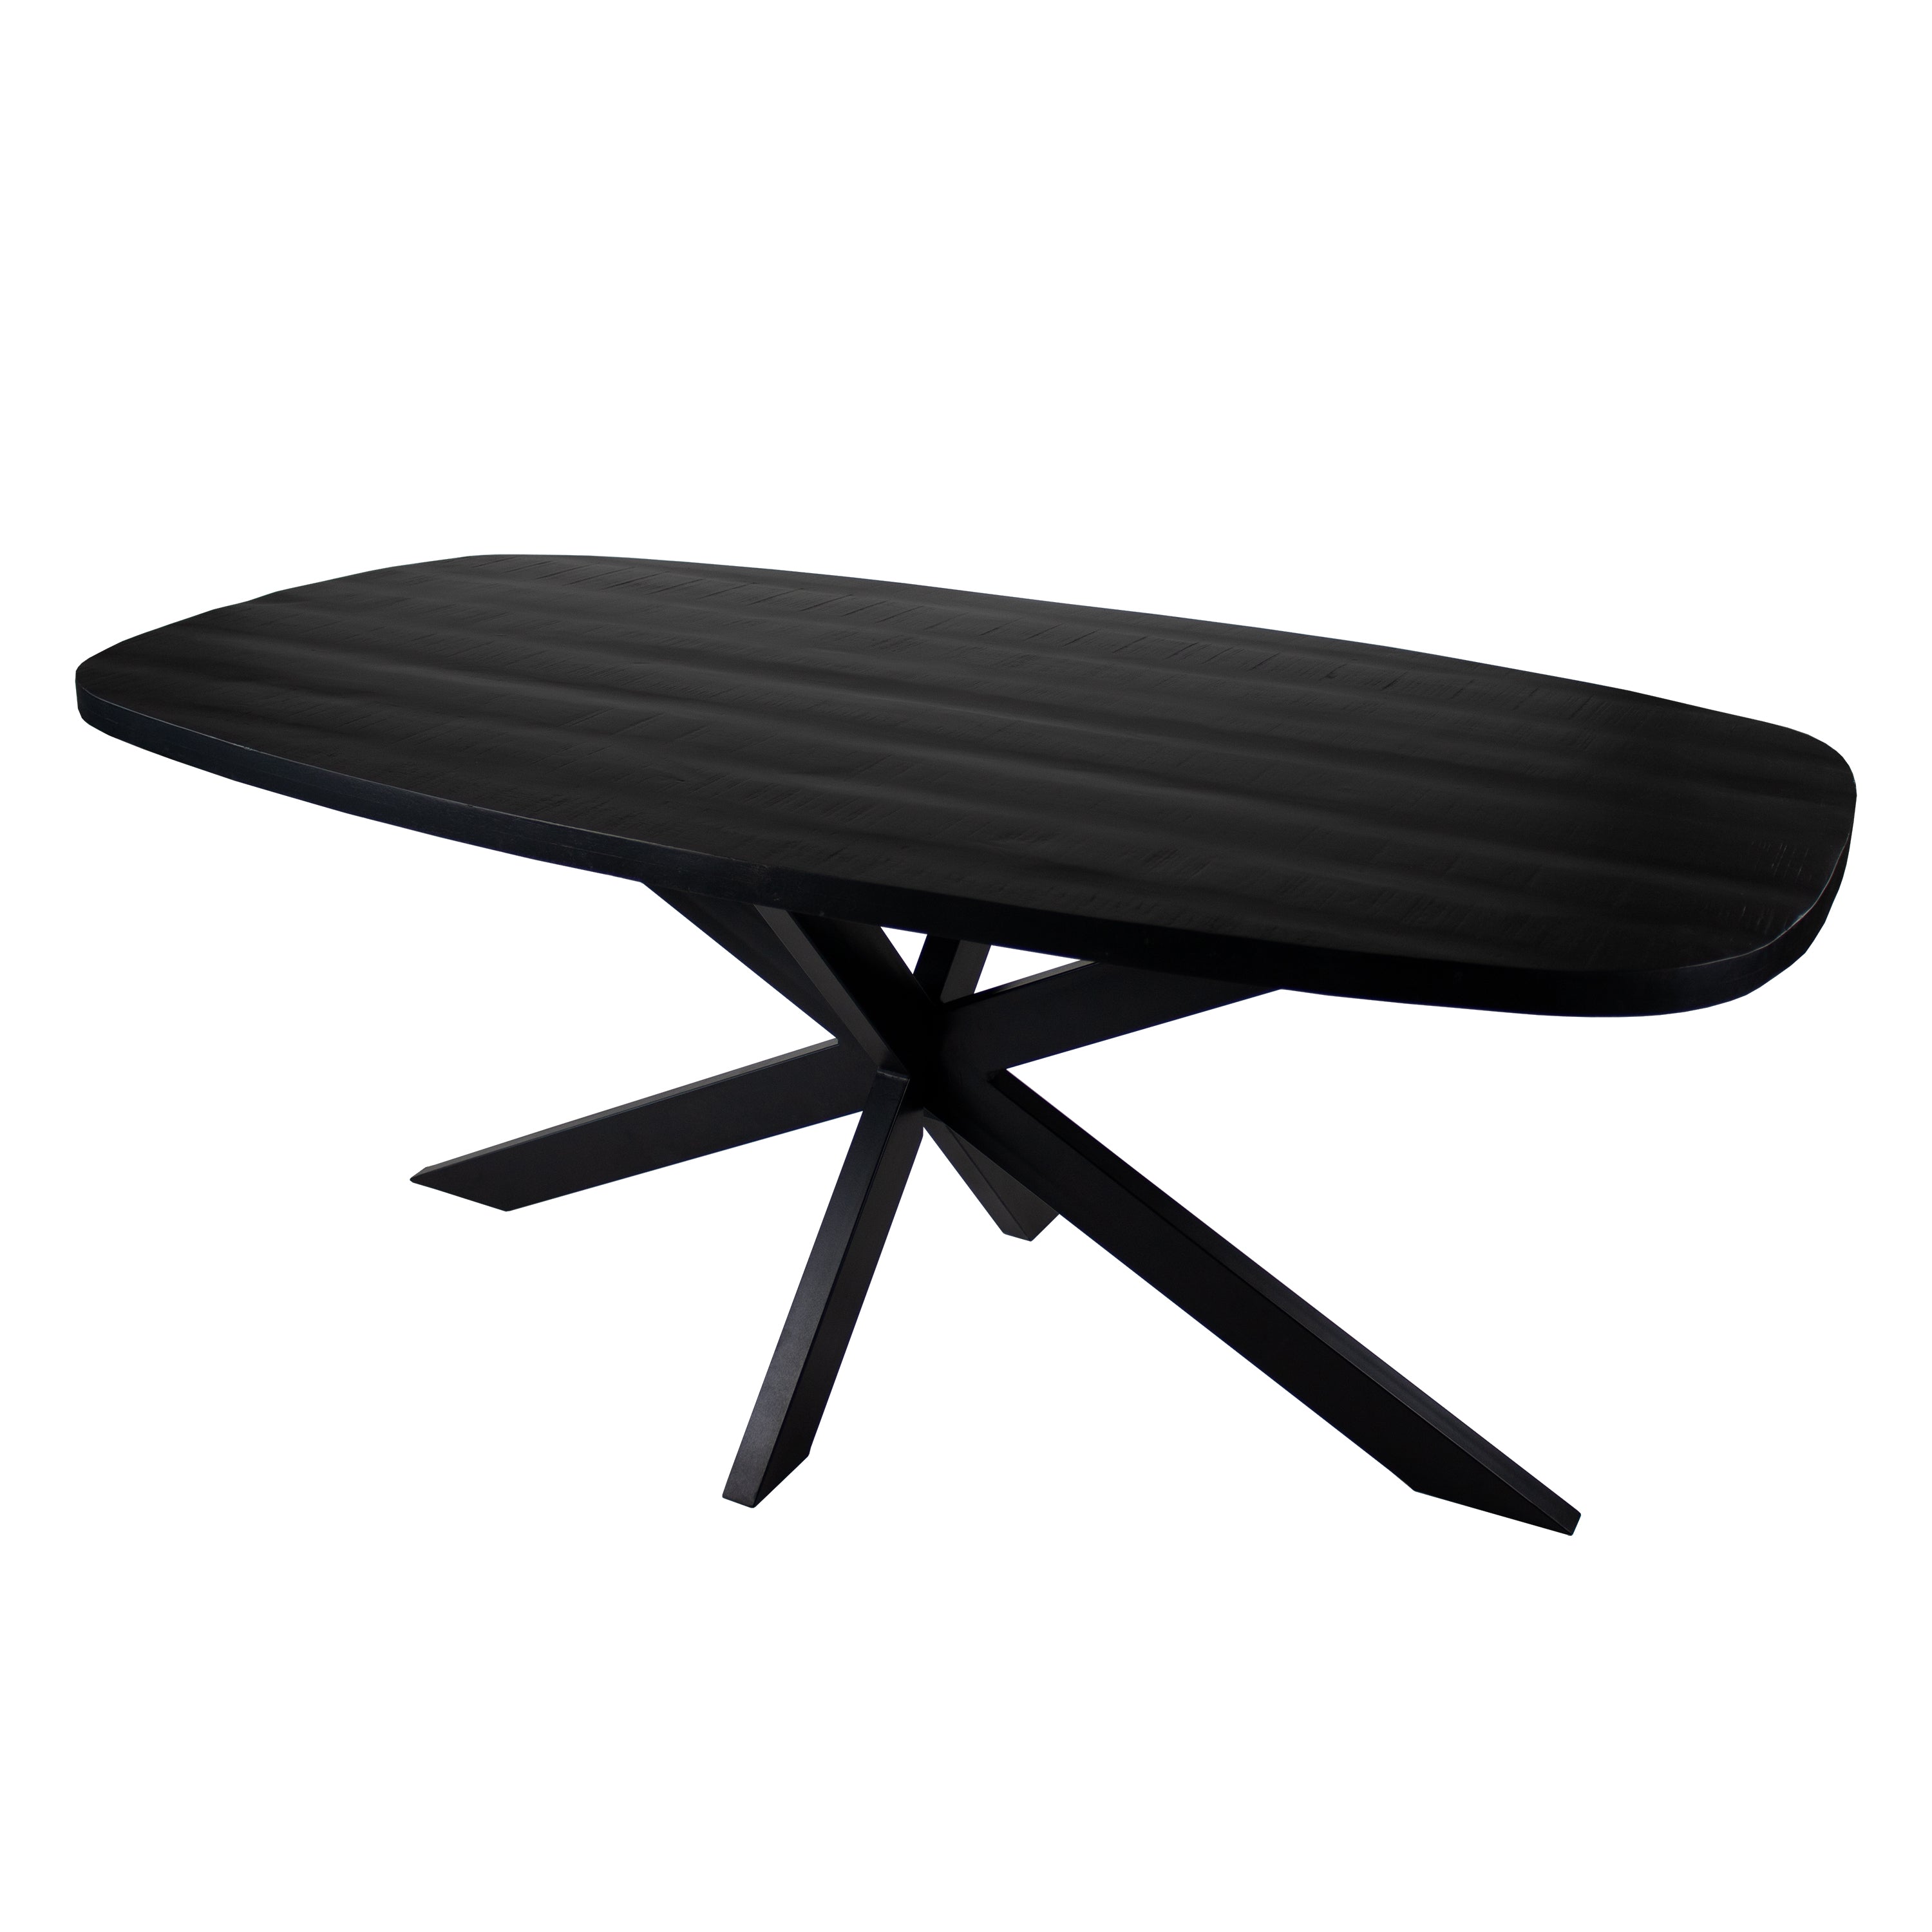 Kick dining table Dane - 180cm